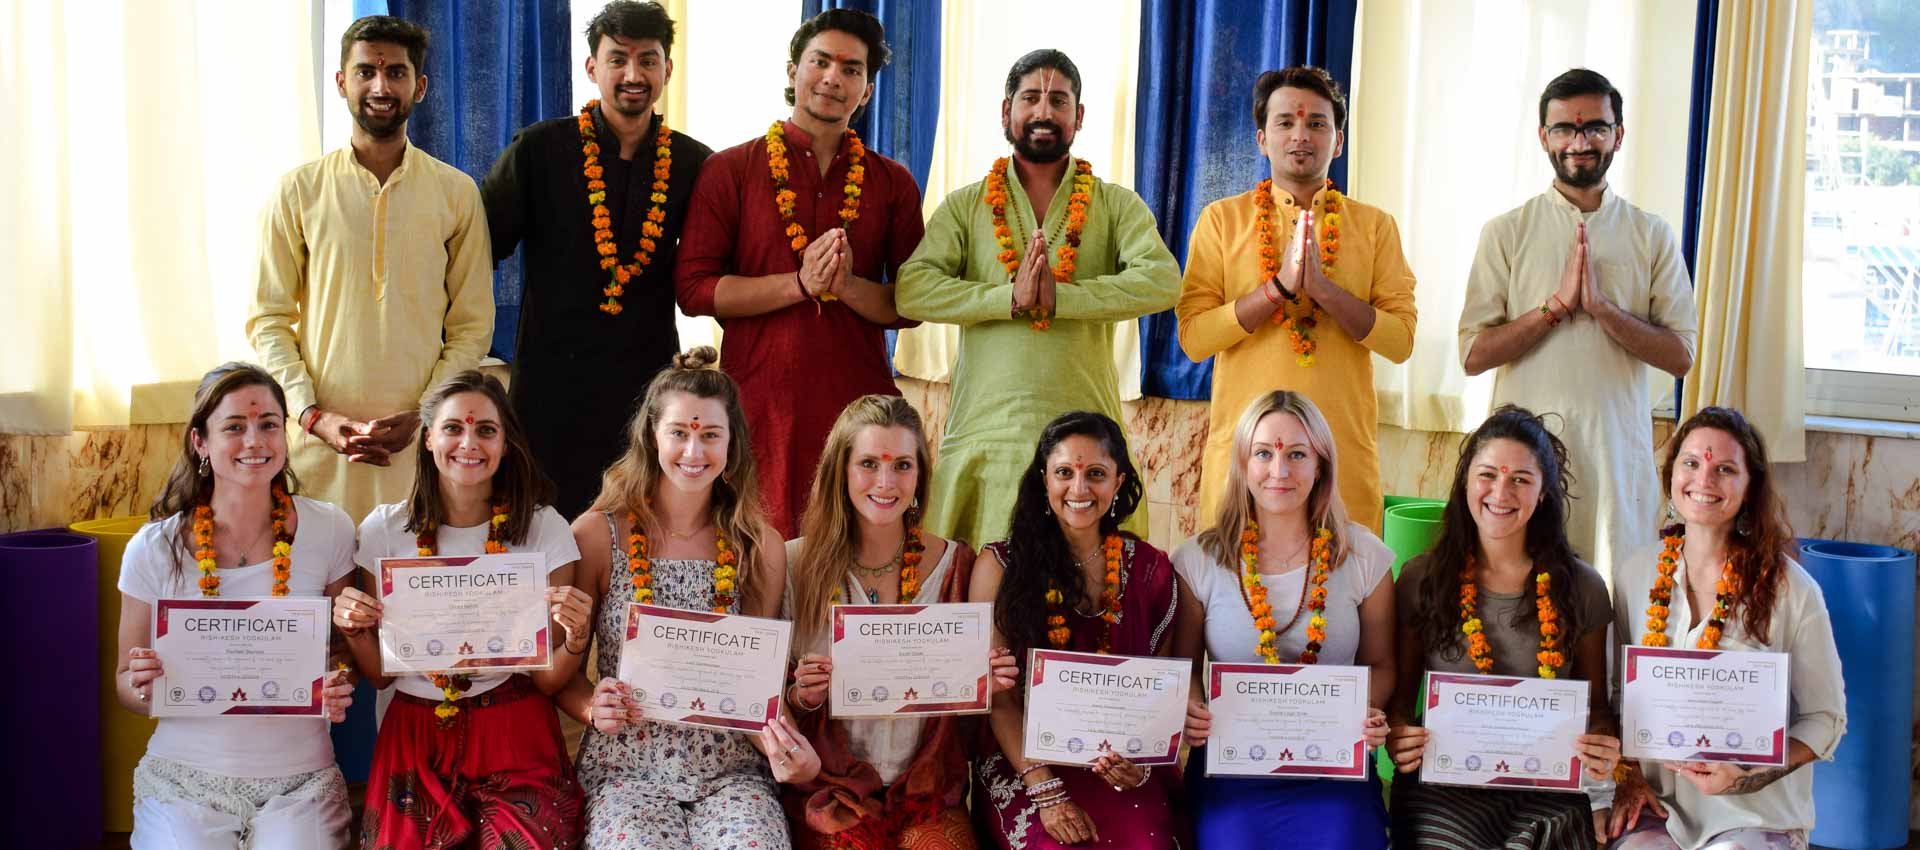 300 Hour Yoga Teacher Training Course in Rishikesh- September 2019, Rishikesh, Uttarakhand, India